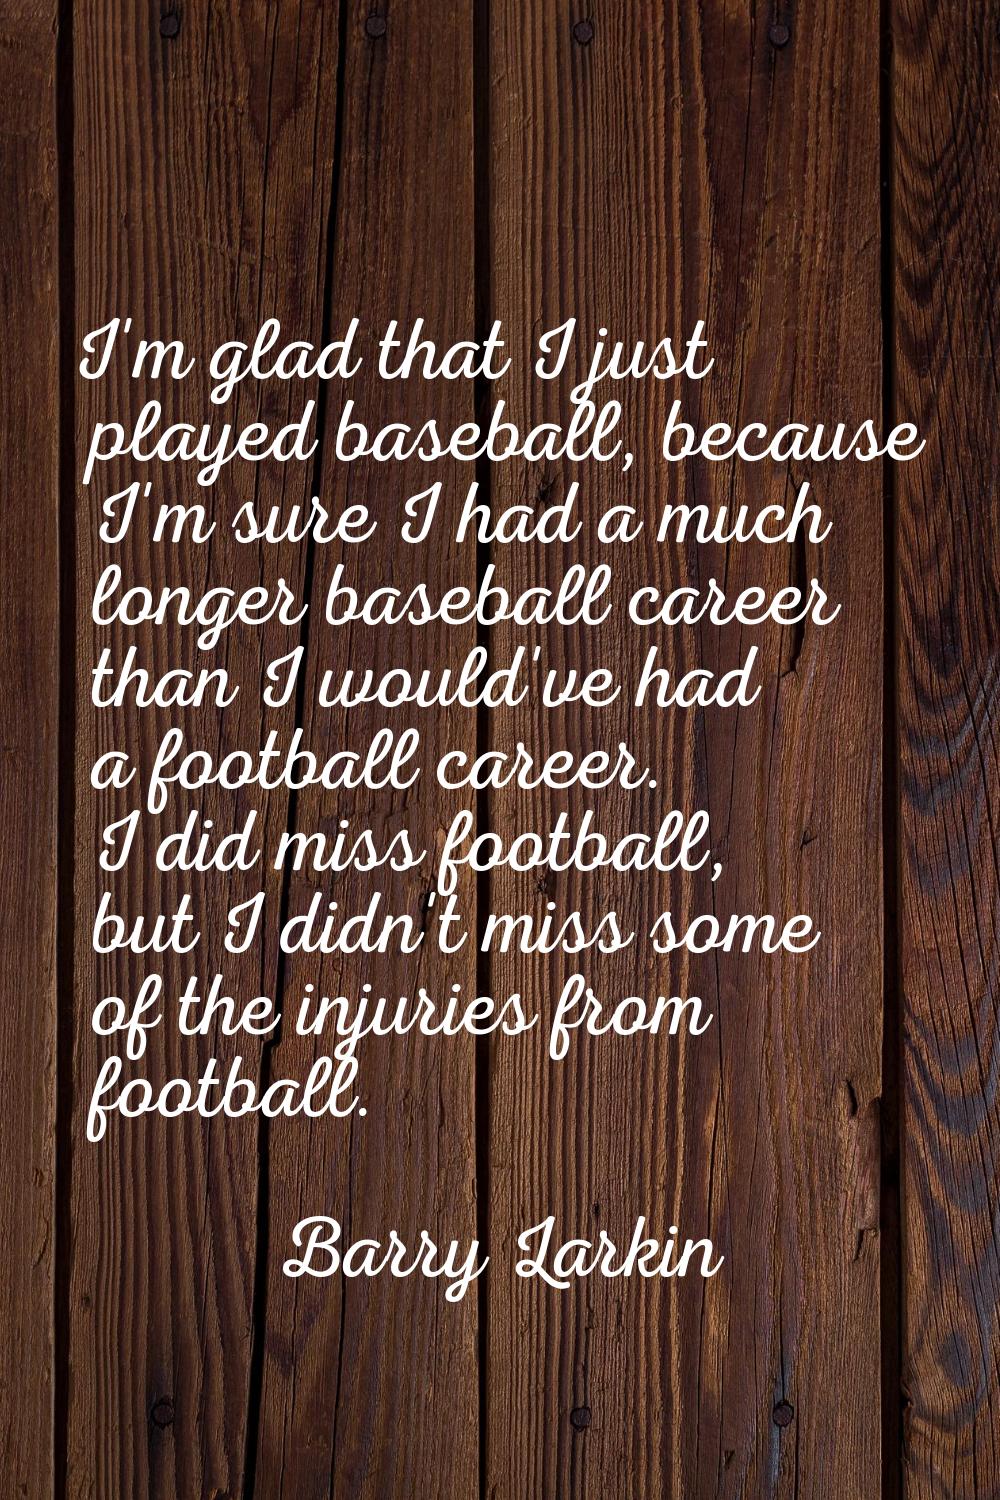 I'm glad that I just played baseball, because I'm sure I had a much longer baseball career than I w